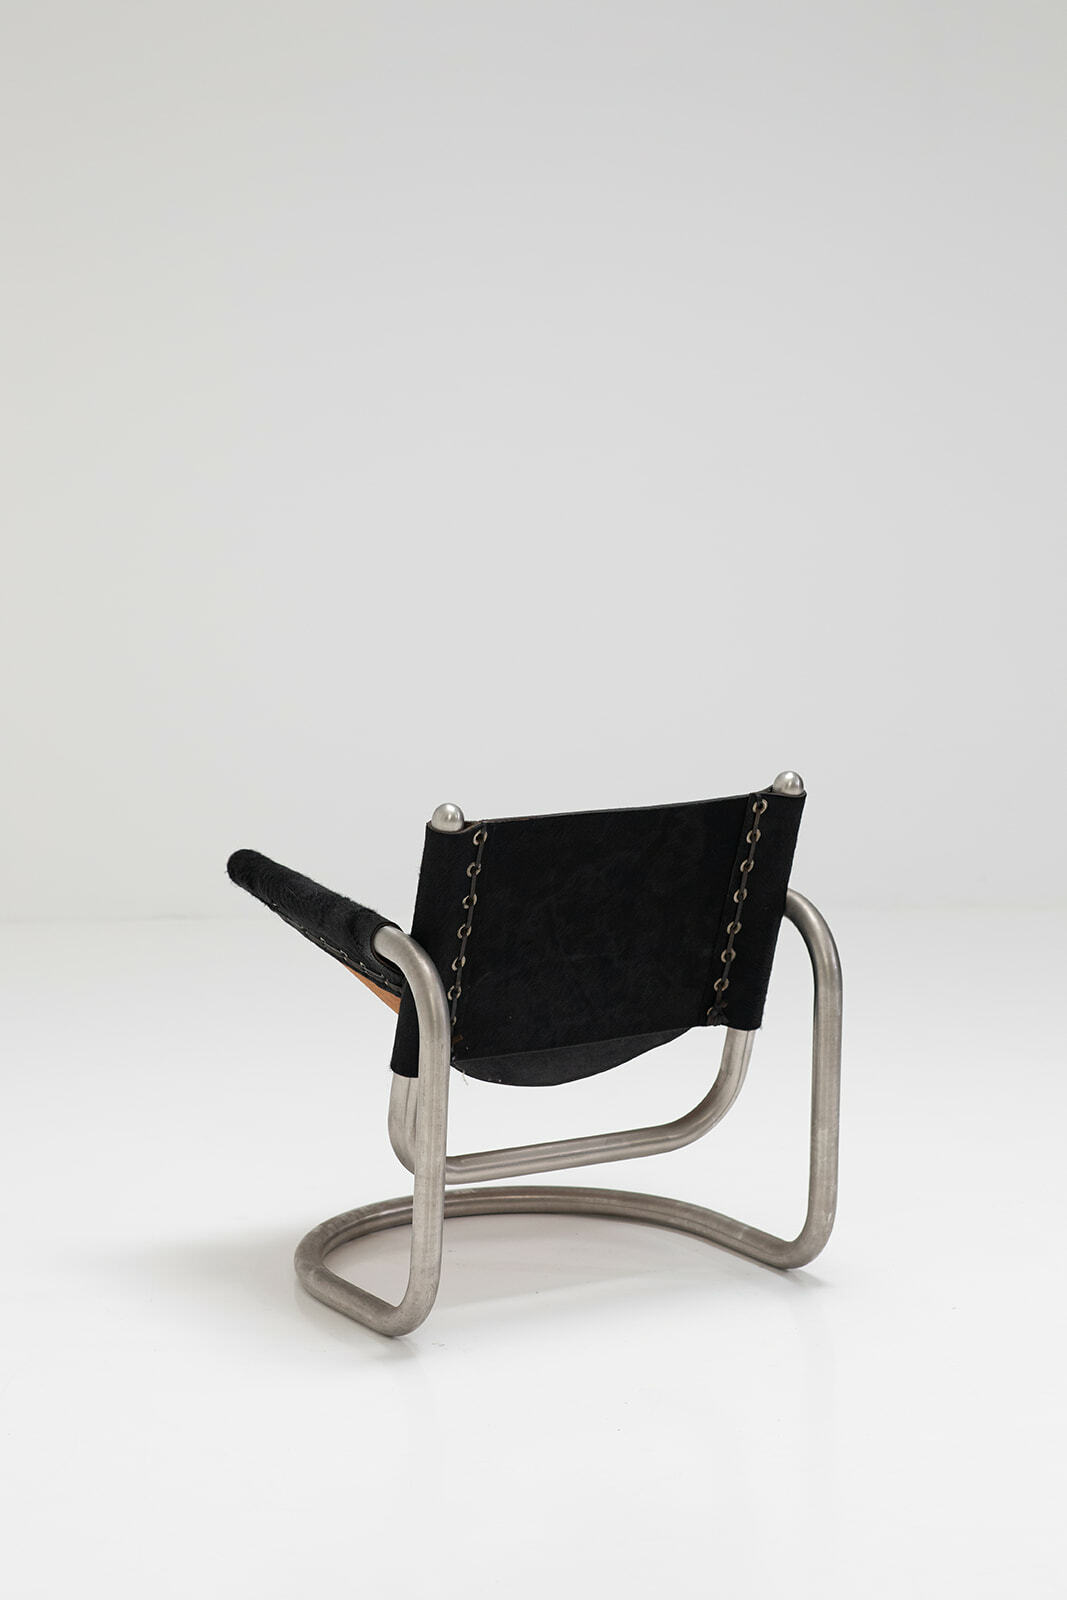 Unknown Italian chair